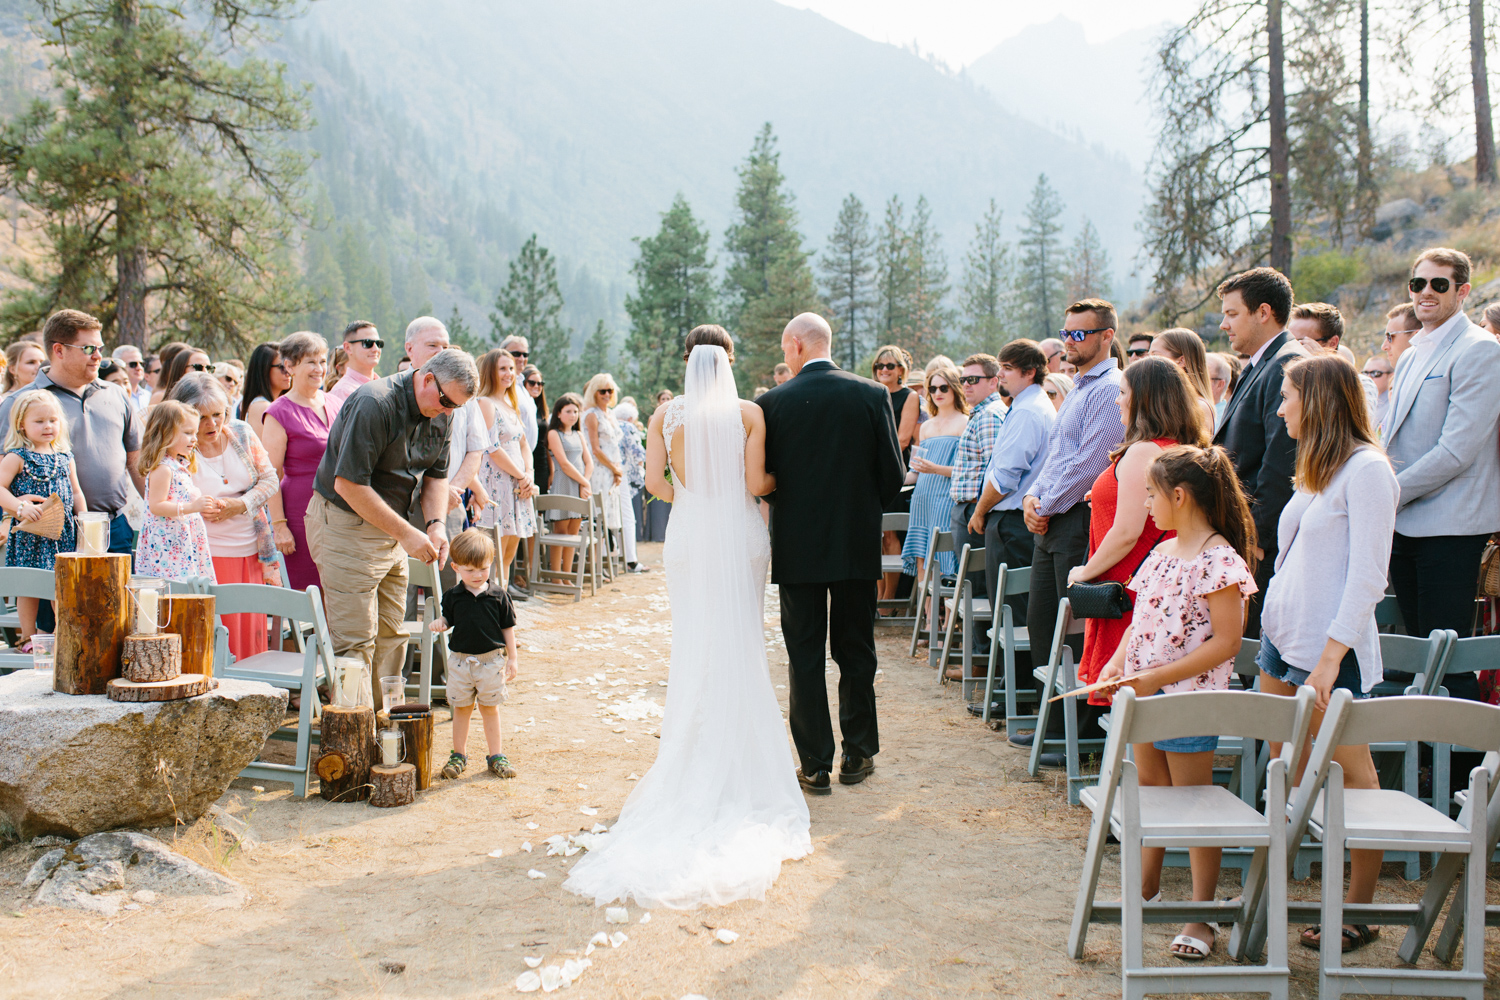 Grey and White Wedding in the Mountains of Leavenworth, Washington | Sleeping Lady | Classic and Timeless Wedding | VSCO | Leavenworth Wedding Ceremony at Sleeping Lady.jpg-0986.jpg